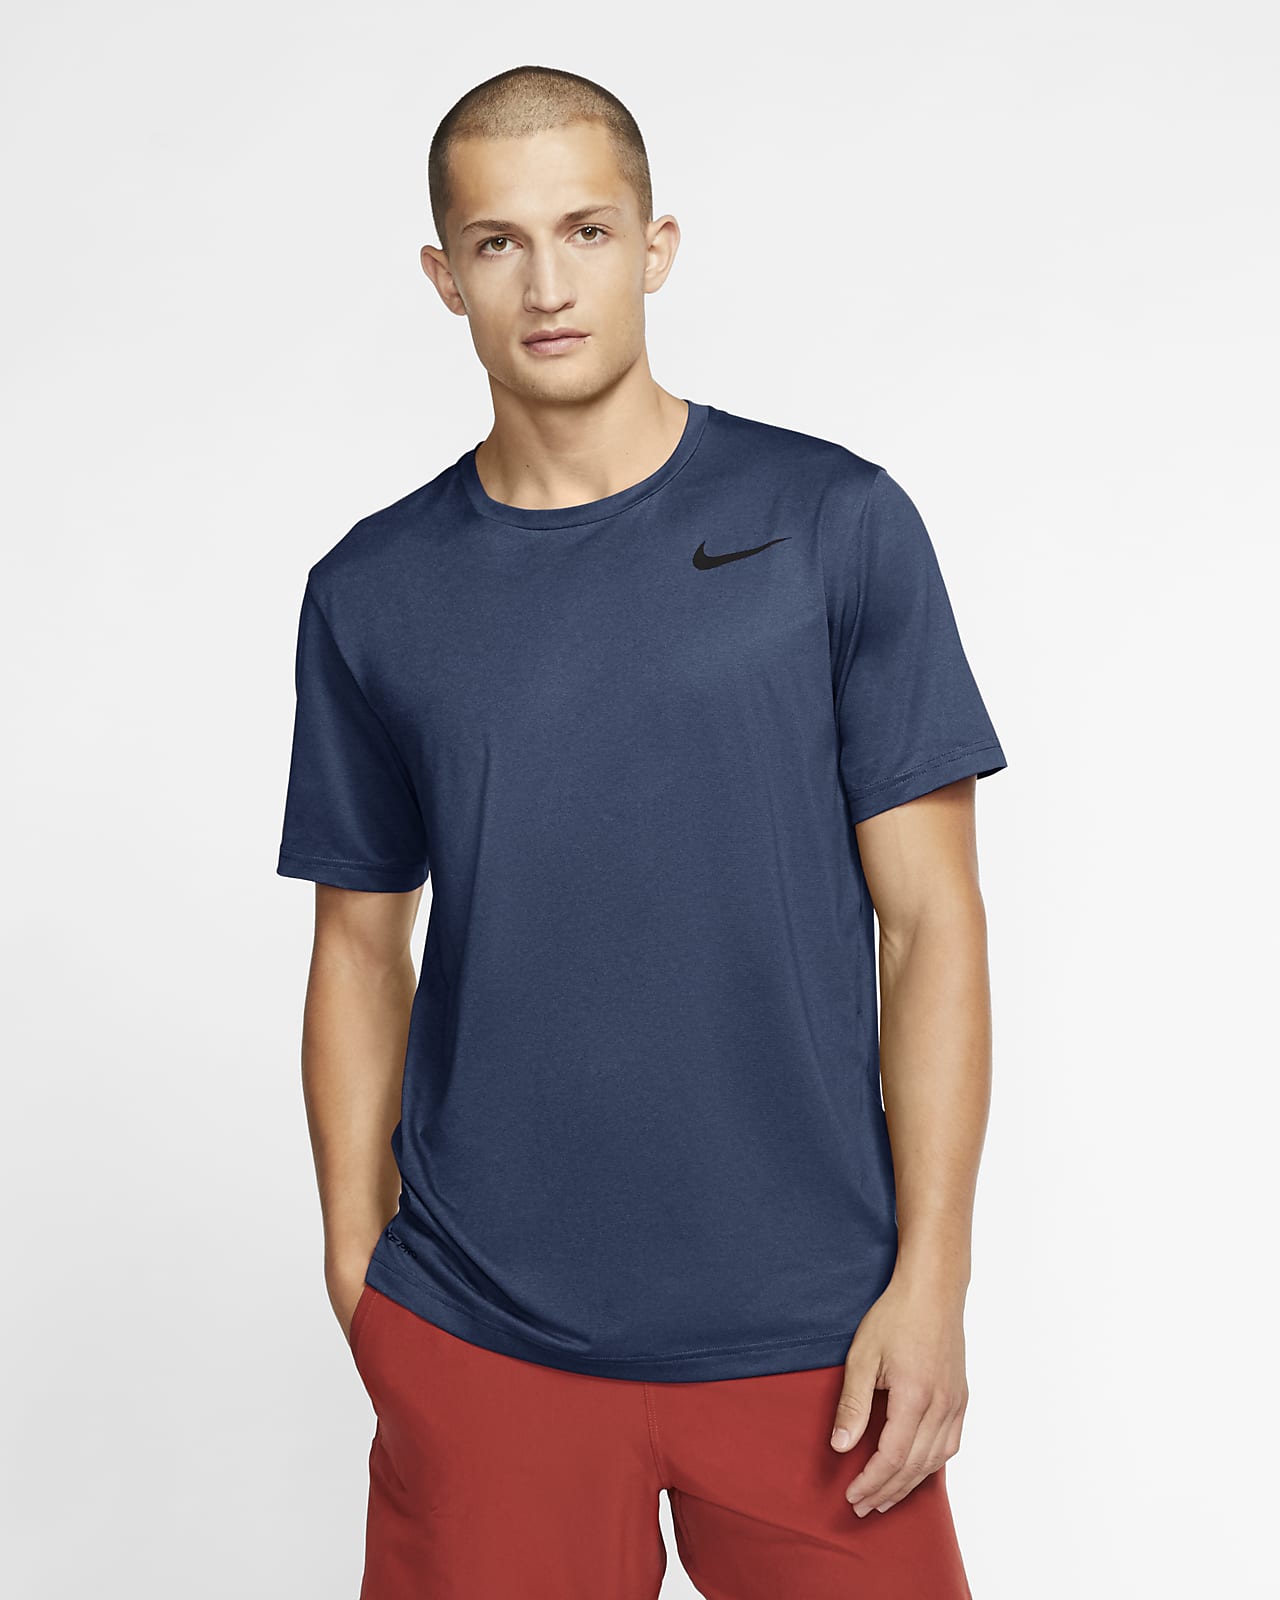 Nike Pro Men's Short-Sleeve Top. Nike LU